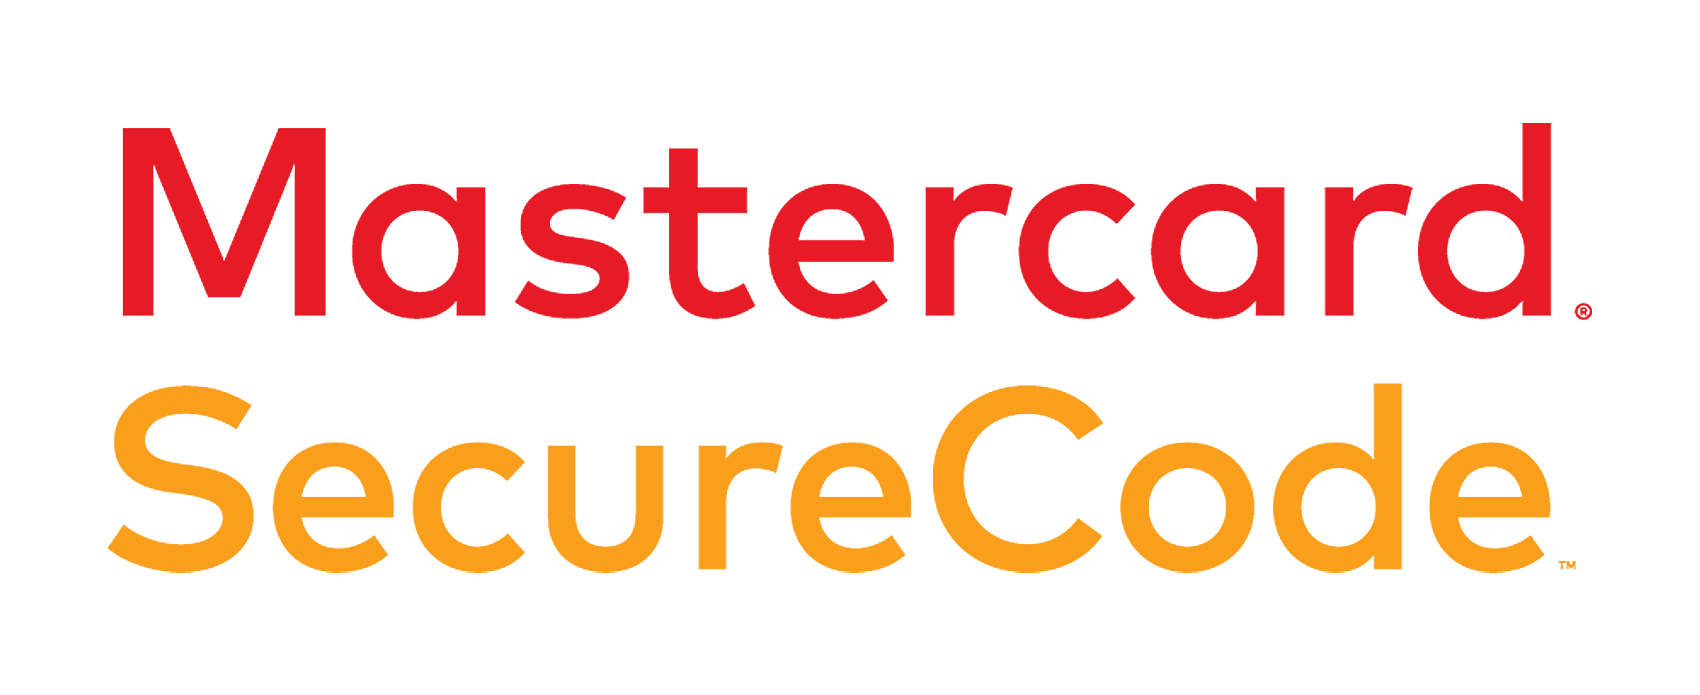 _mastercard-securecode.png